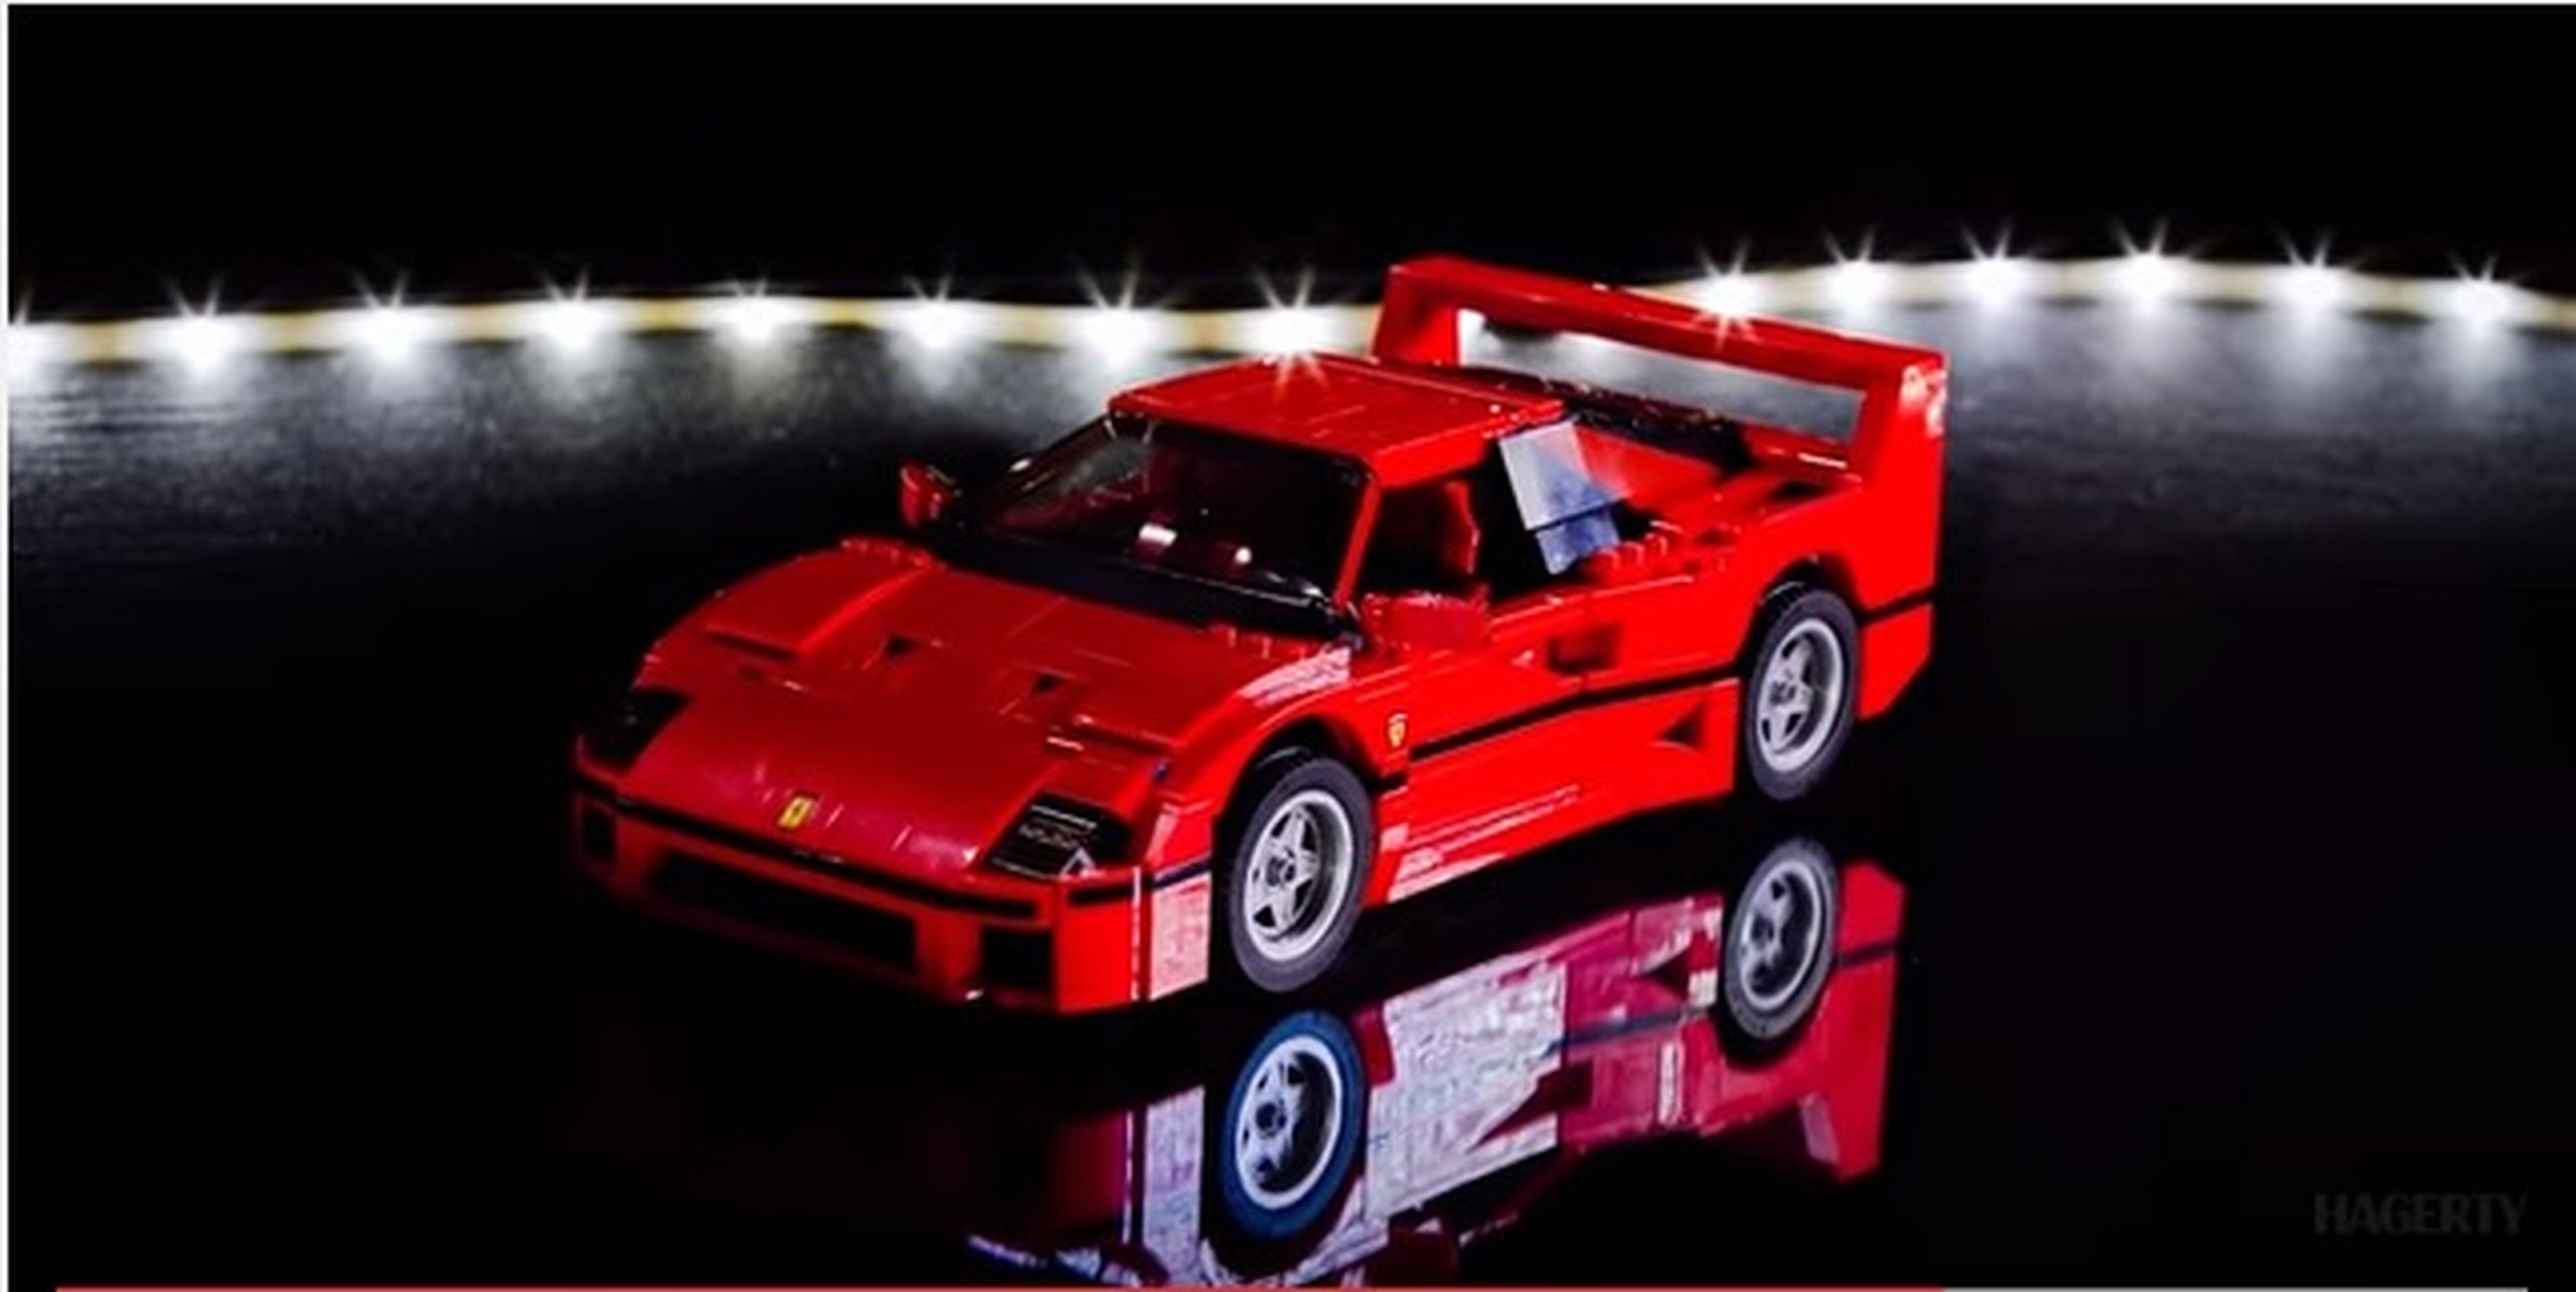 LEGO Ferrari F40 Time-lapse